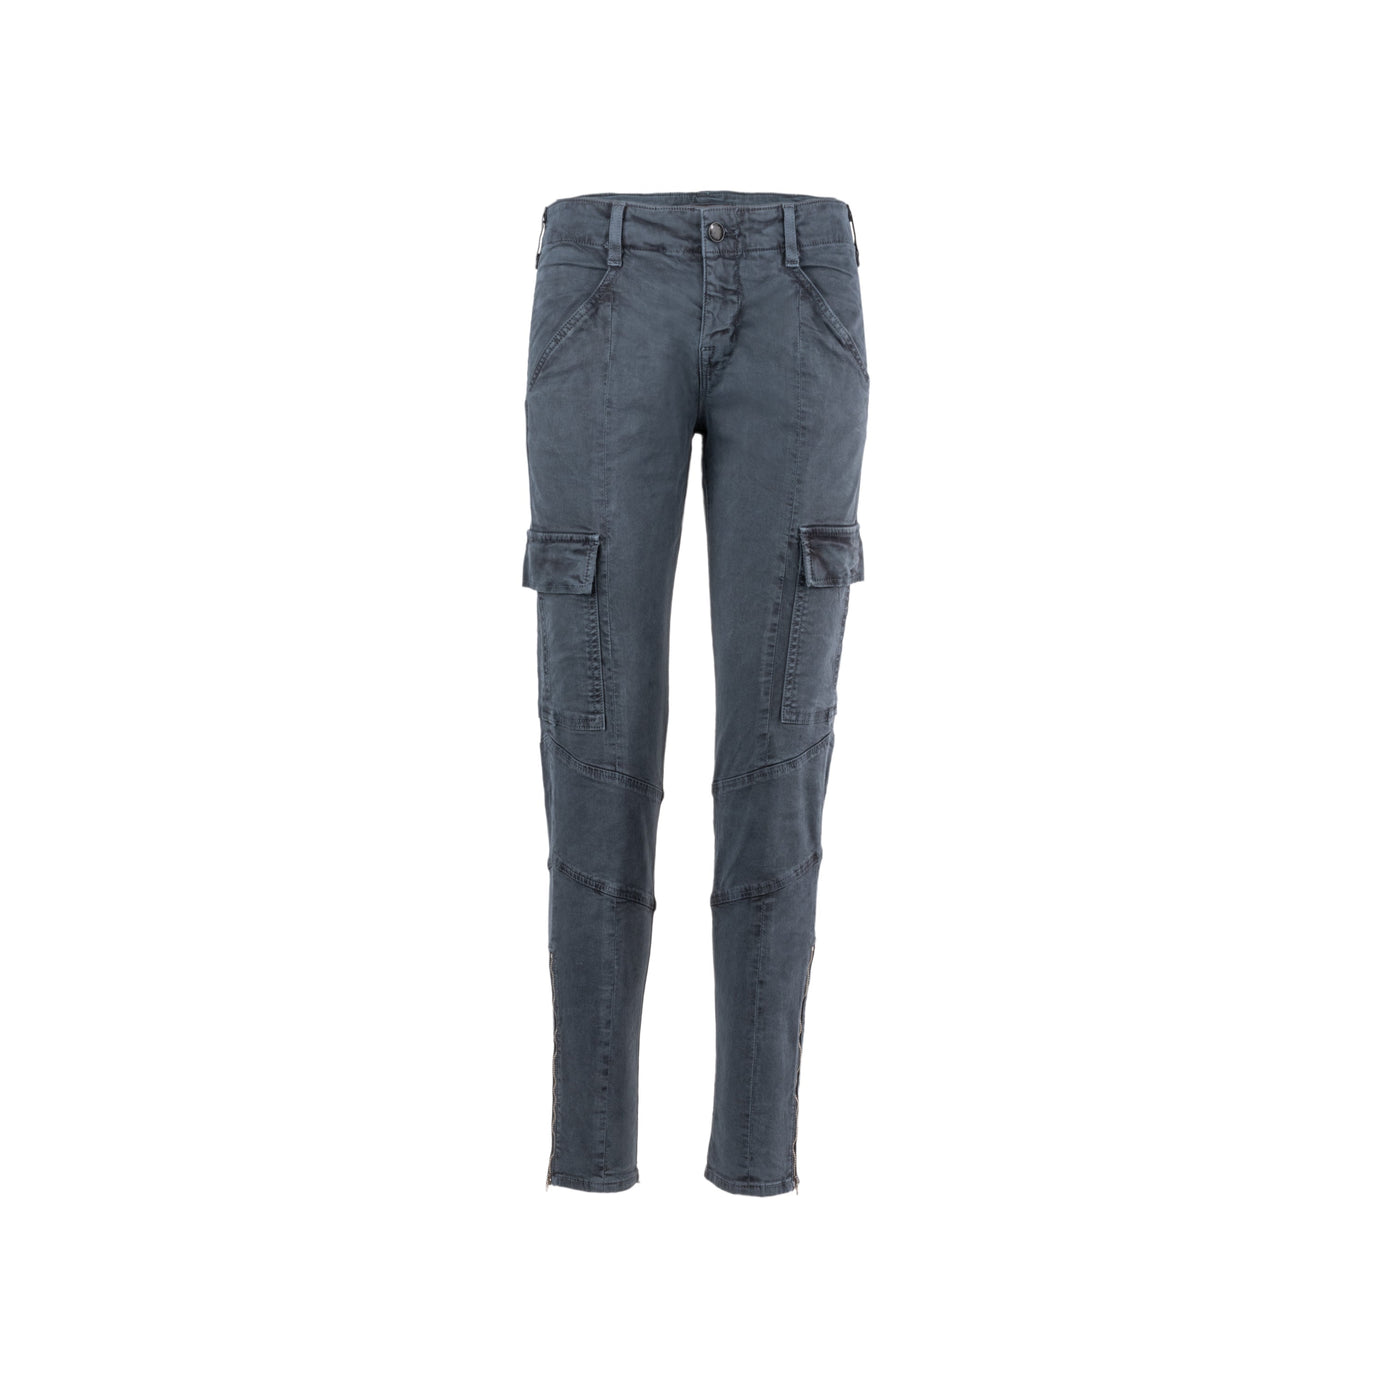 J Brand vint navy slim fit jeans pre-owned